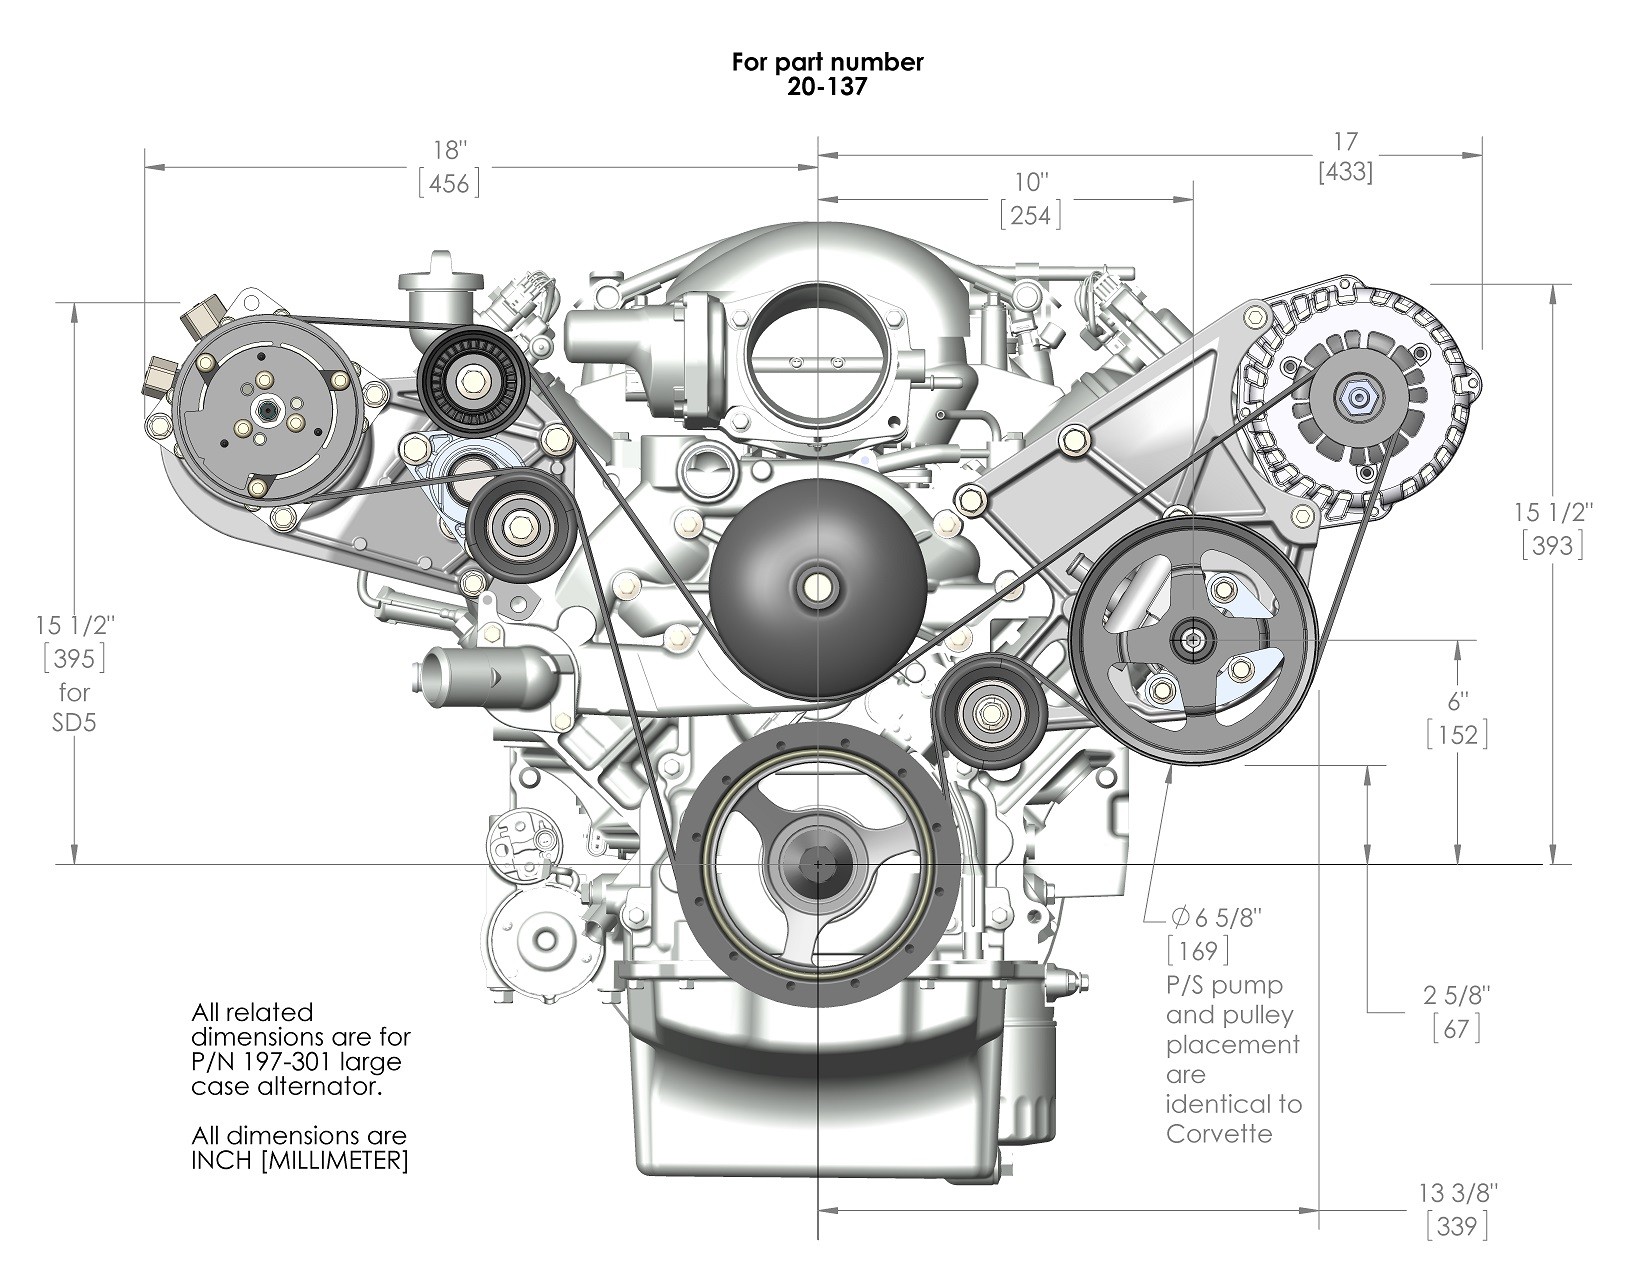 Turbocharger Parts Diagram | My Wiring DIagram